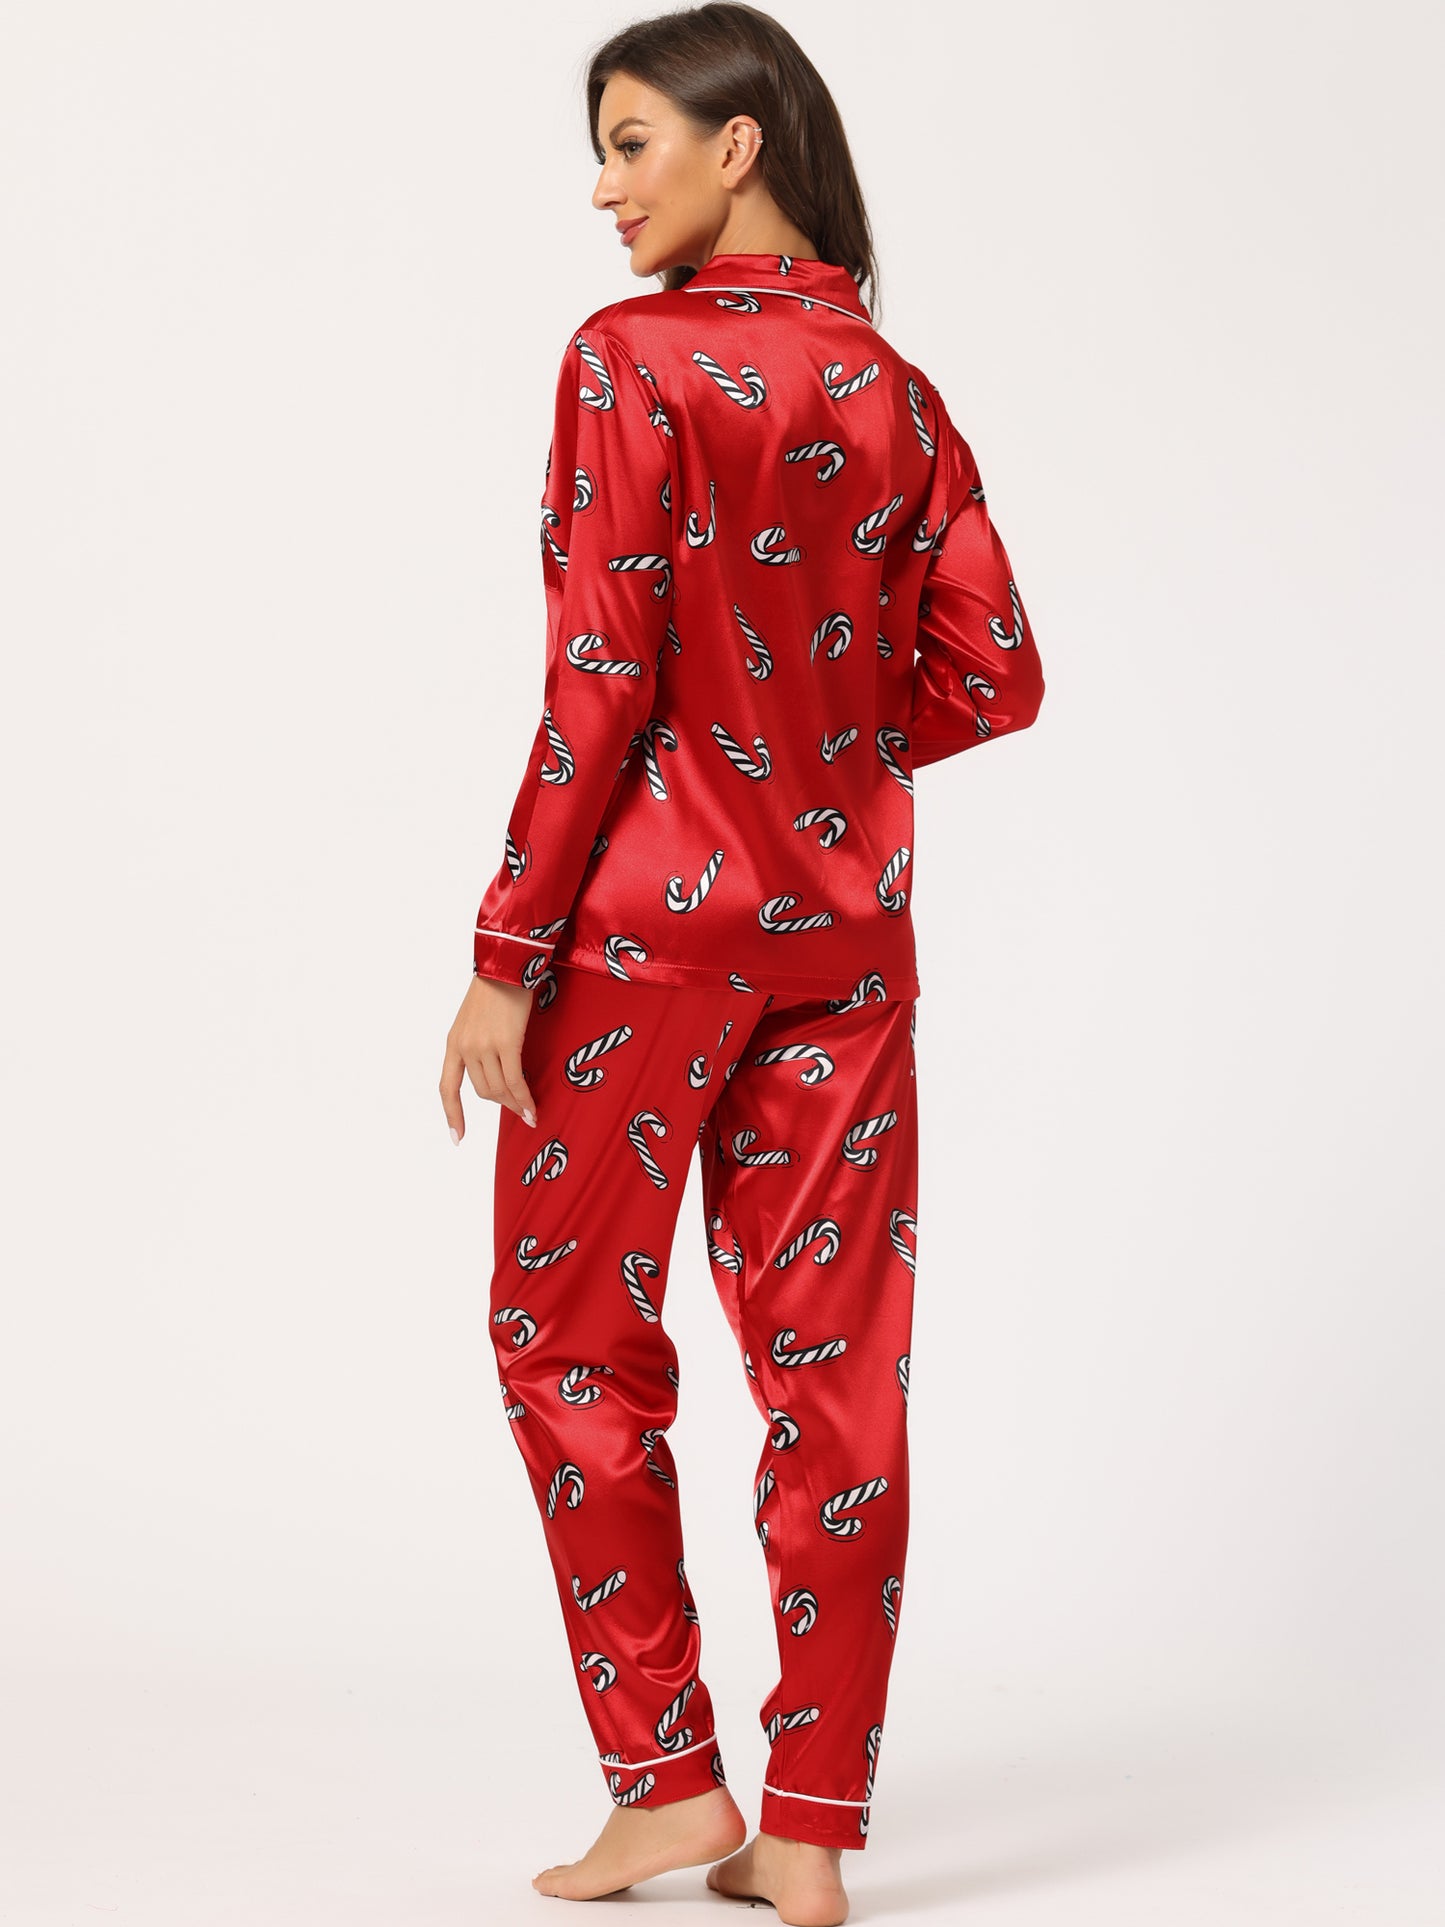 cheibear Pajama Sleep Shirt Nightwear Sleepwear Lounge Satin Pj Sets Red